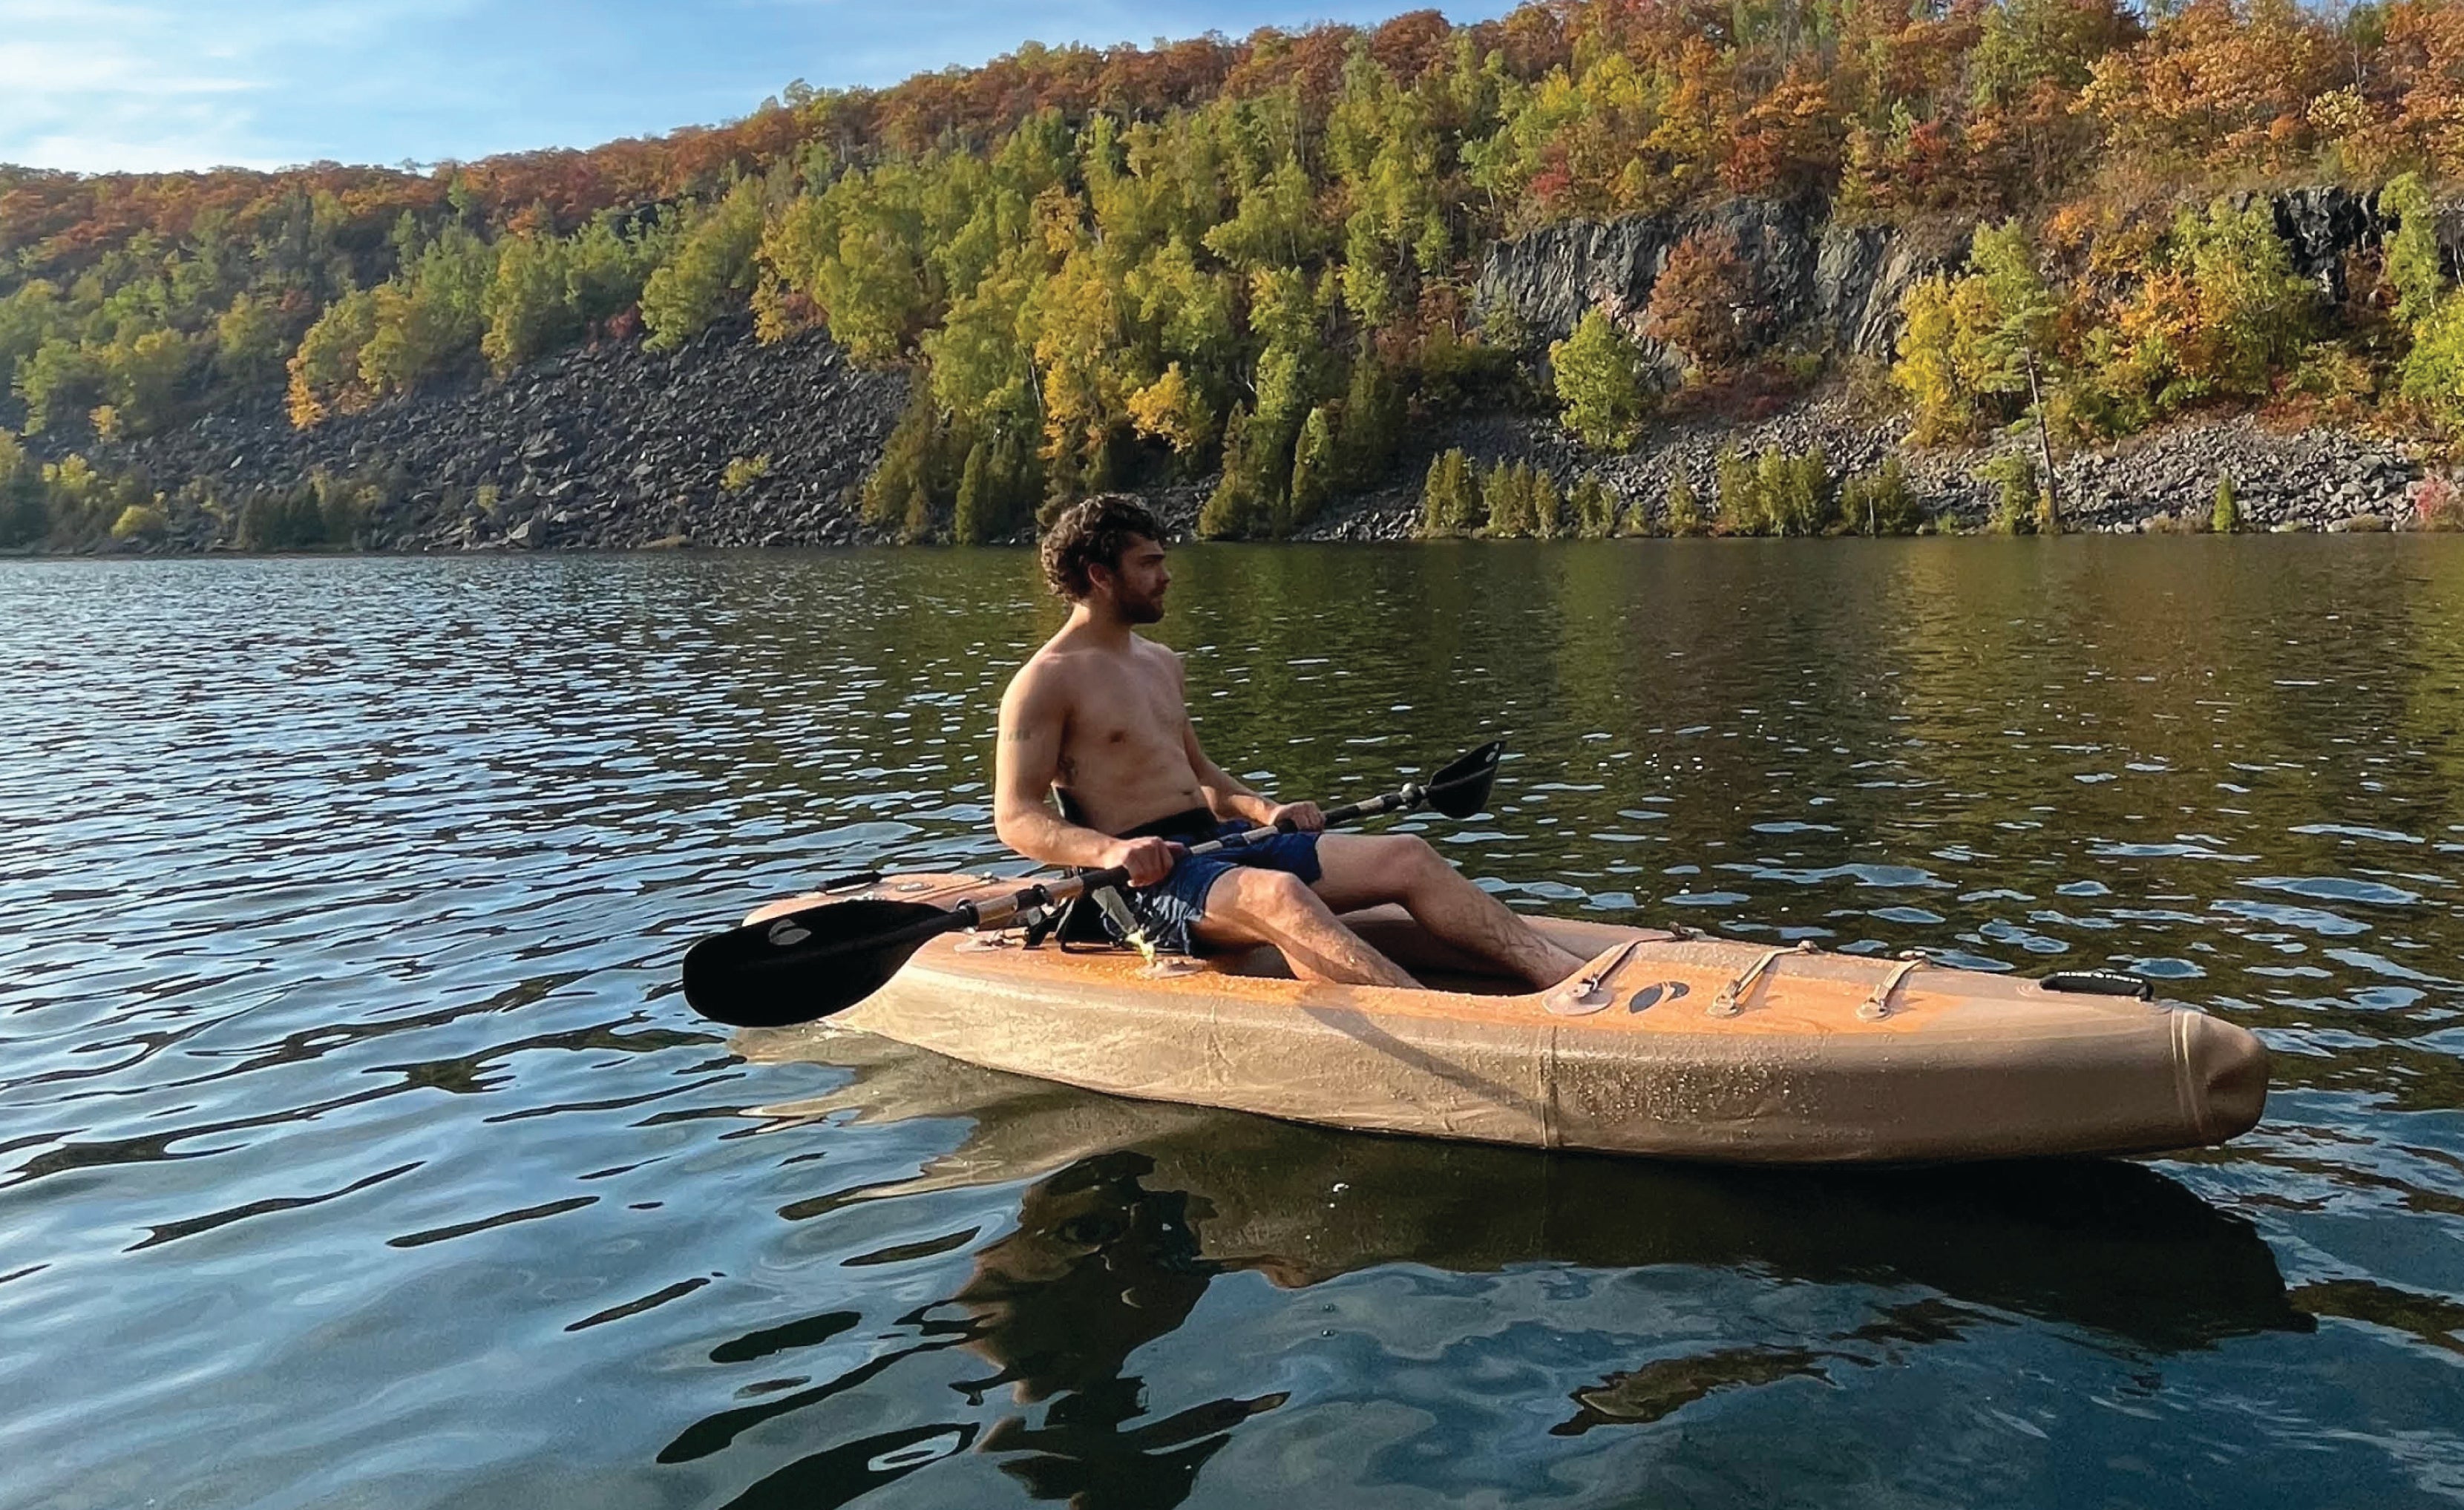 Karve Kayak 3.0 - User Guide